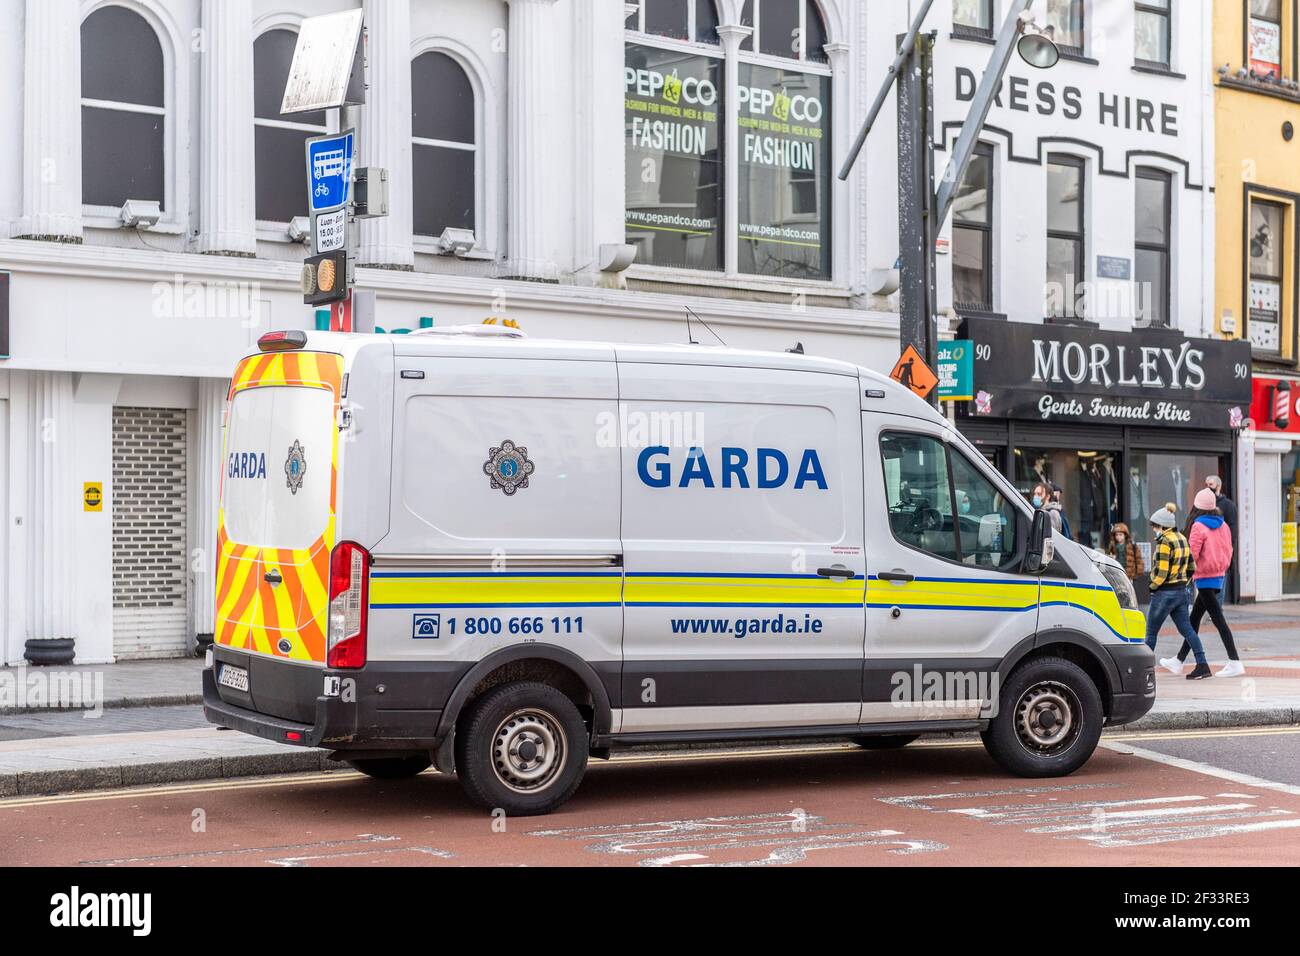 Garda (Irish Police) van parked in Cork City Centre, Ireland. Stock Photo